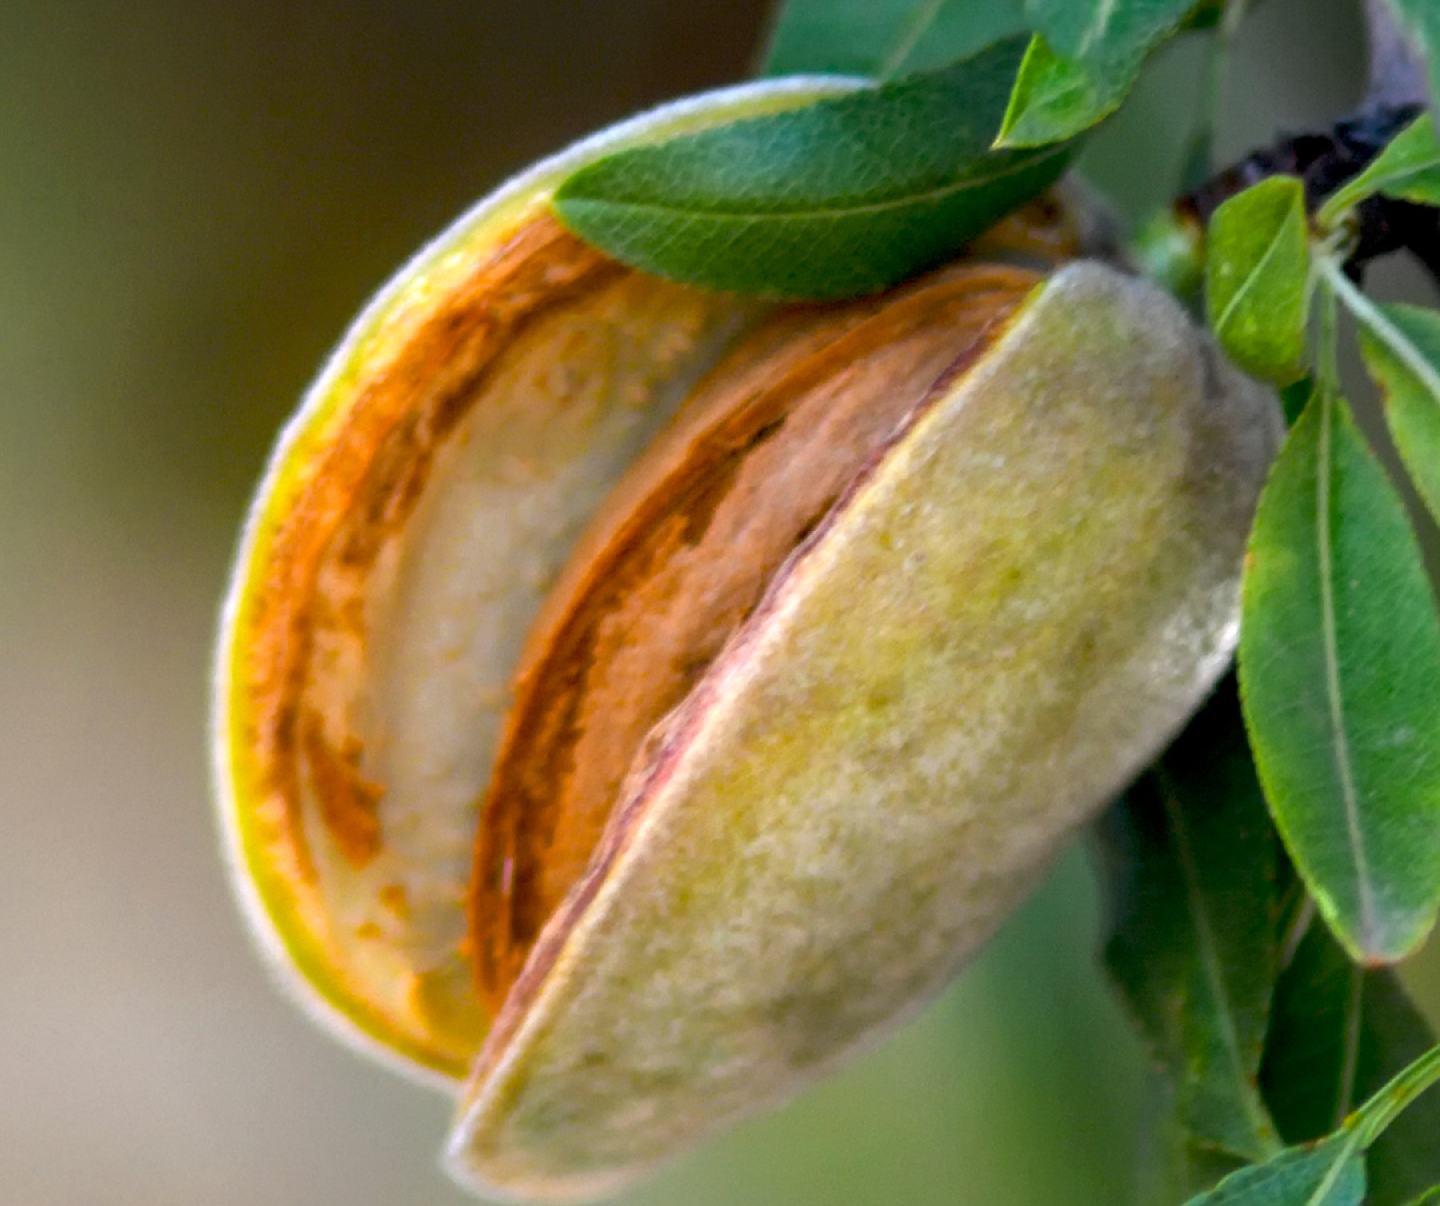 Close up of almond crop